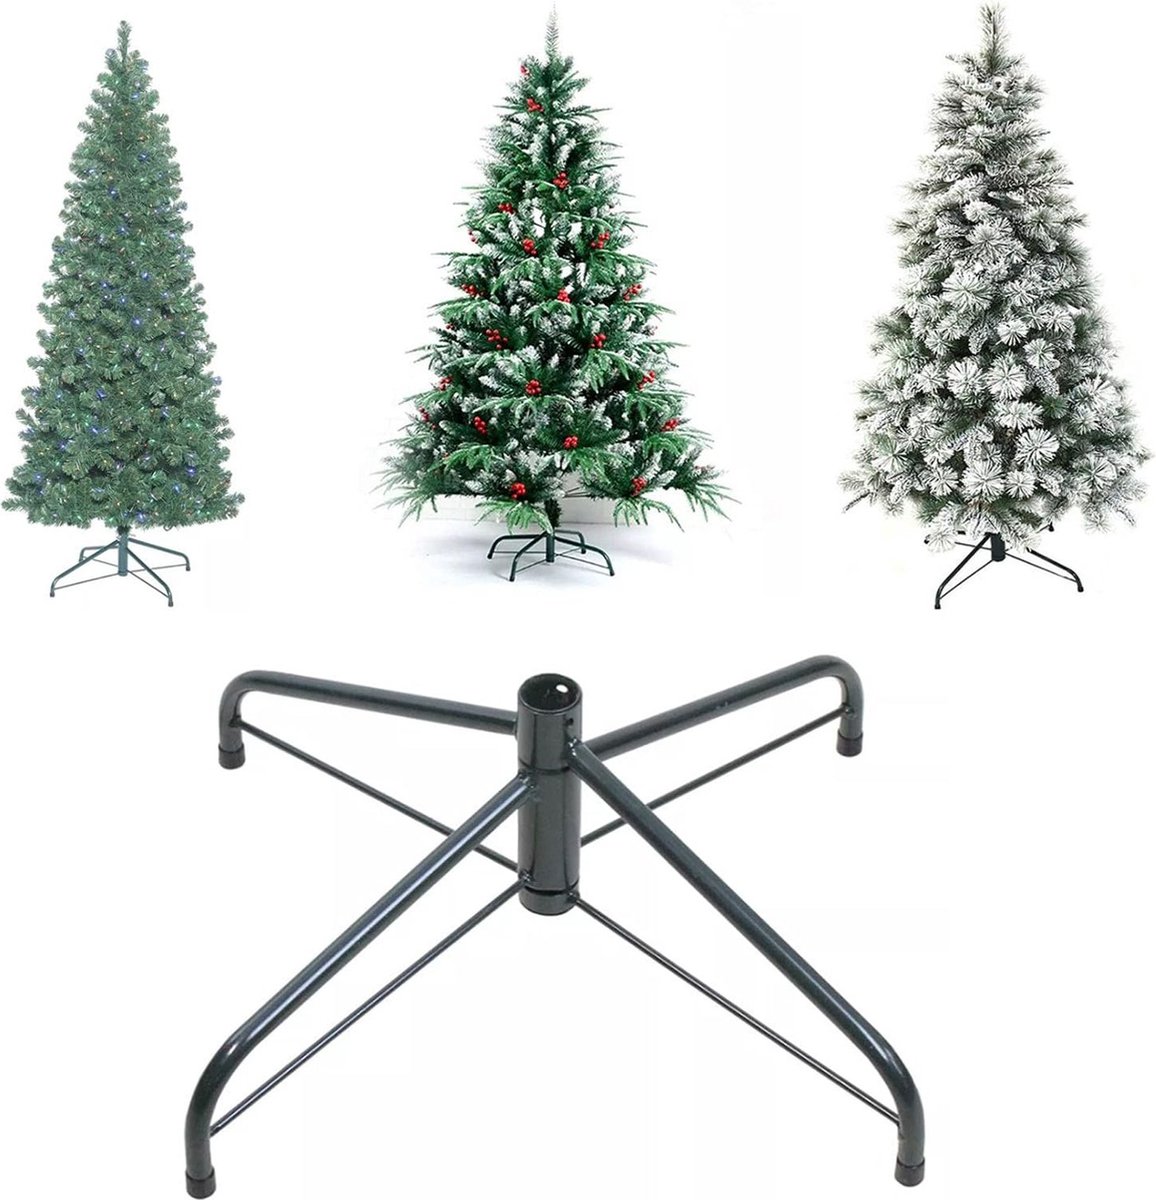 Metalen Kerstboomstandaard - Kunstkerstboom Standaard - Opvouwbaar - Stabiele Basis - Voor Ondersteuning van Kerstboom - 35x12x2.5cm